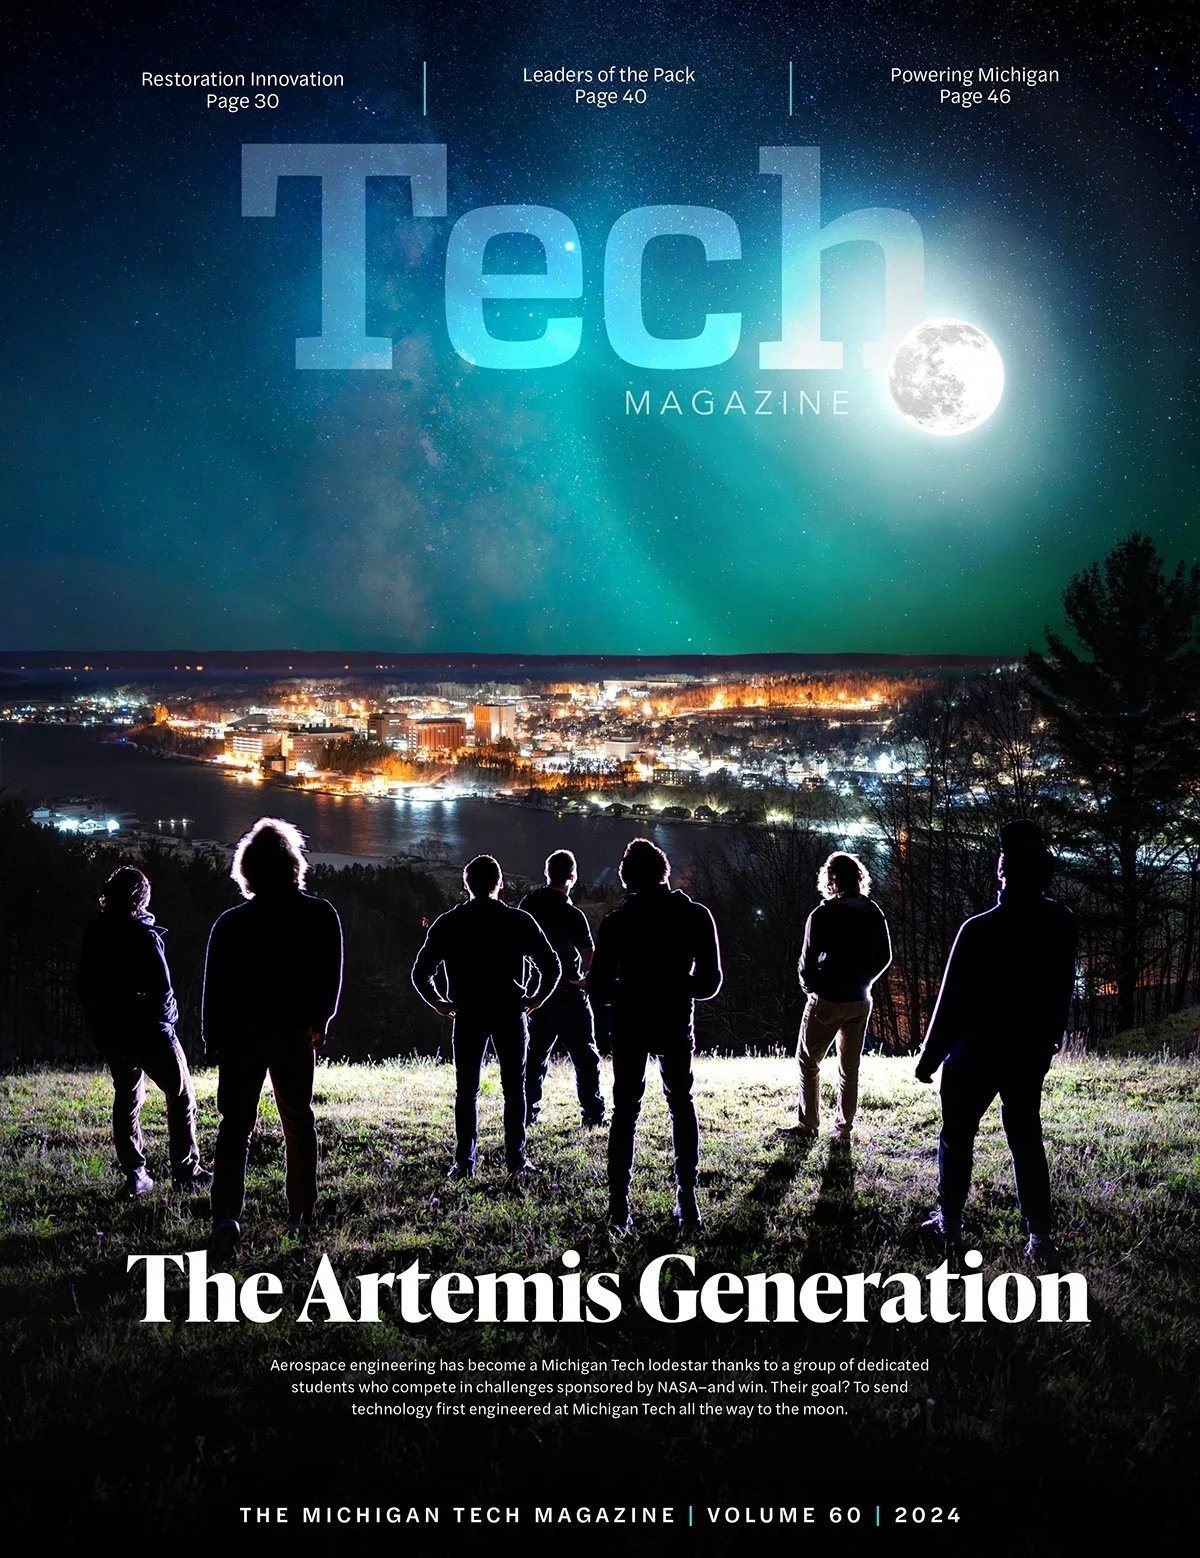 Michigan Tech Magazine 2021